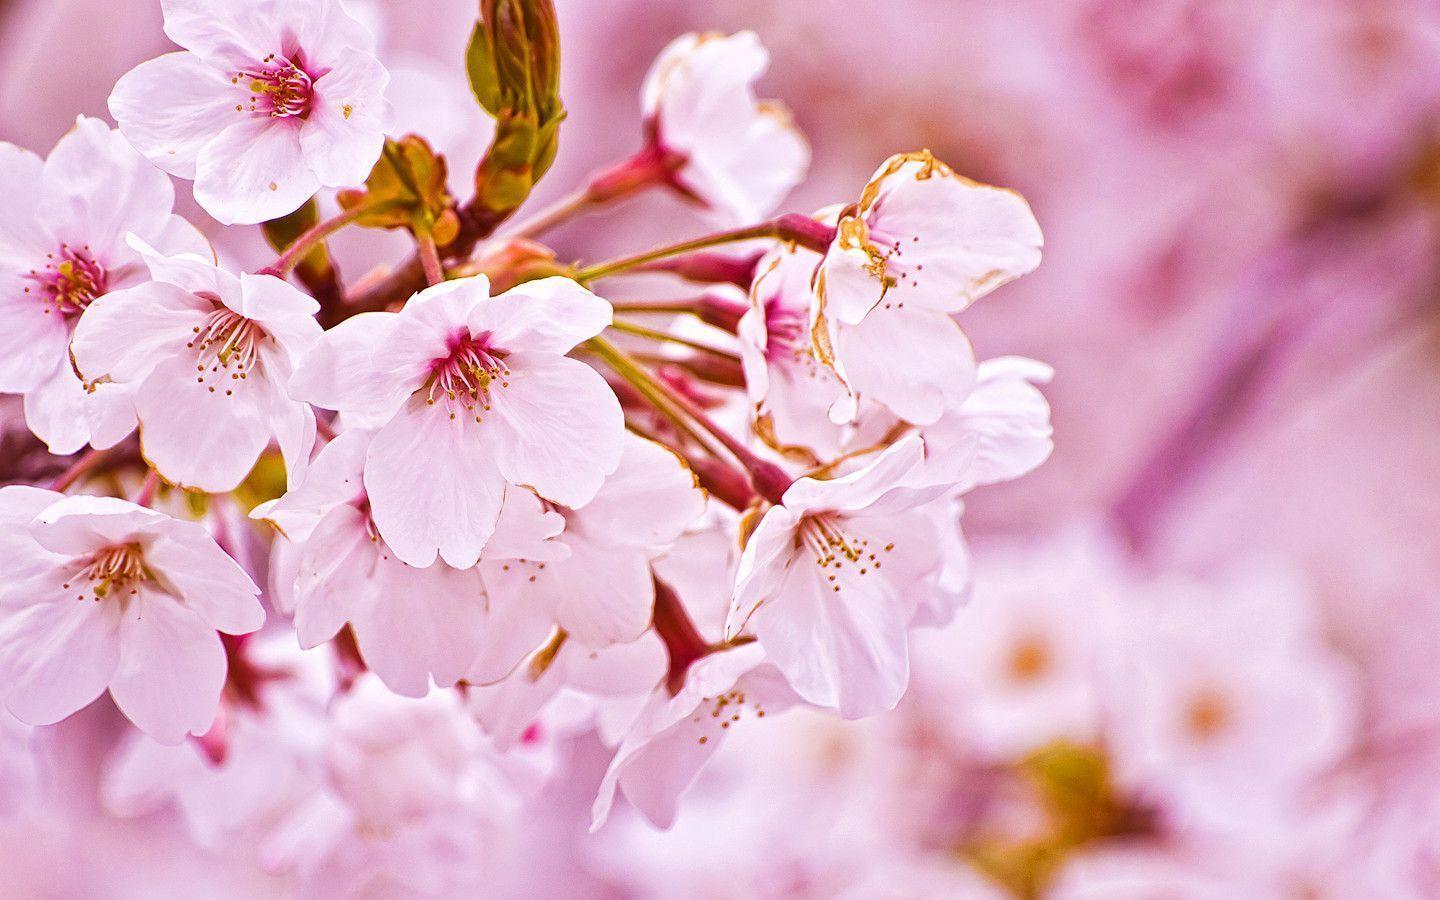 Cherry blossom wallpaper HD. Funny & Amazing Image